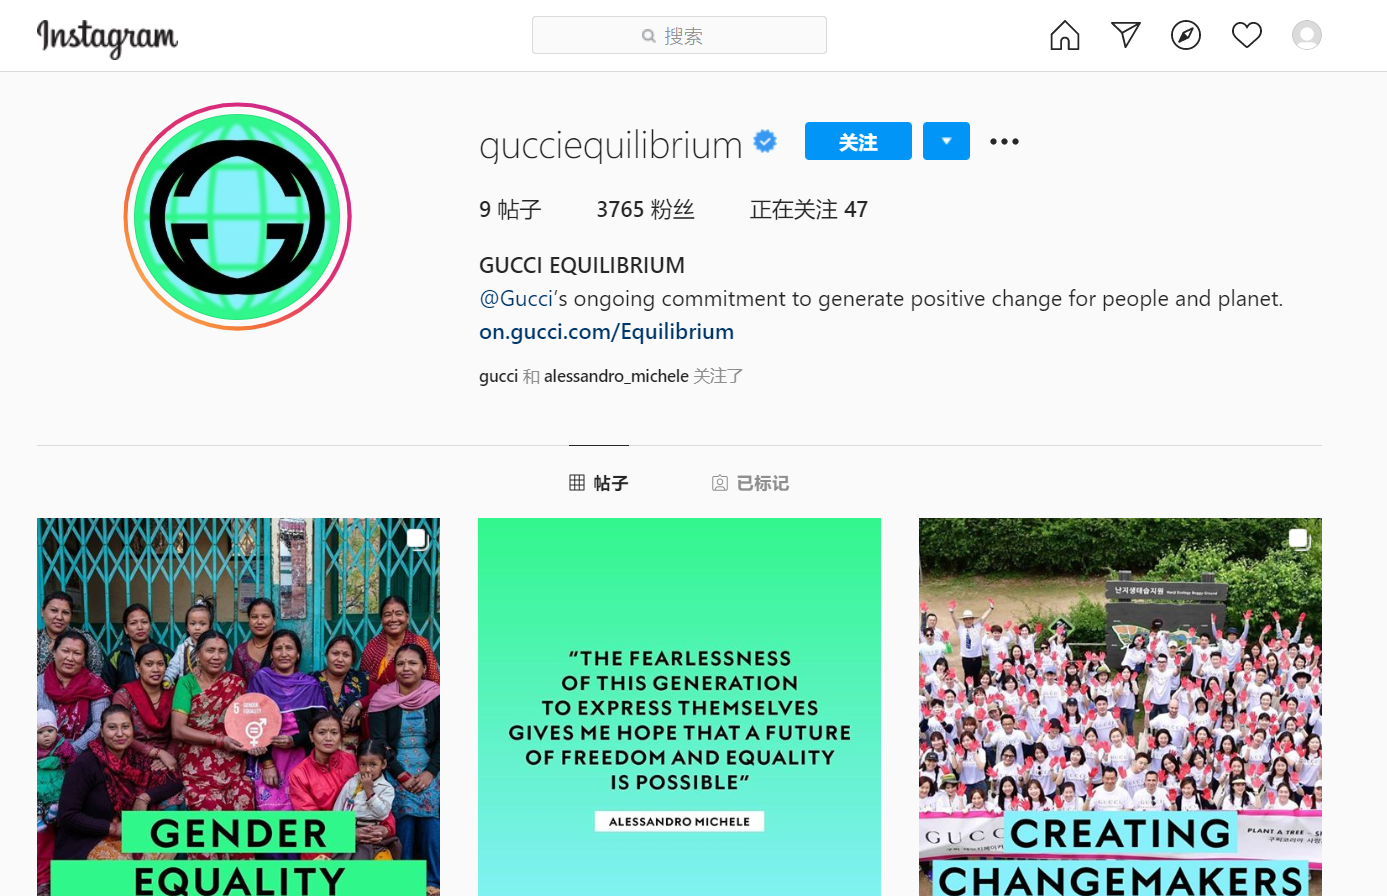 Gucci 在 Instagram 推出可持续时尚专属账号